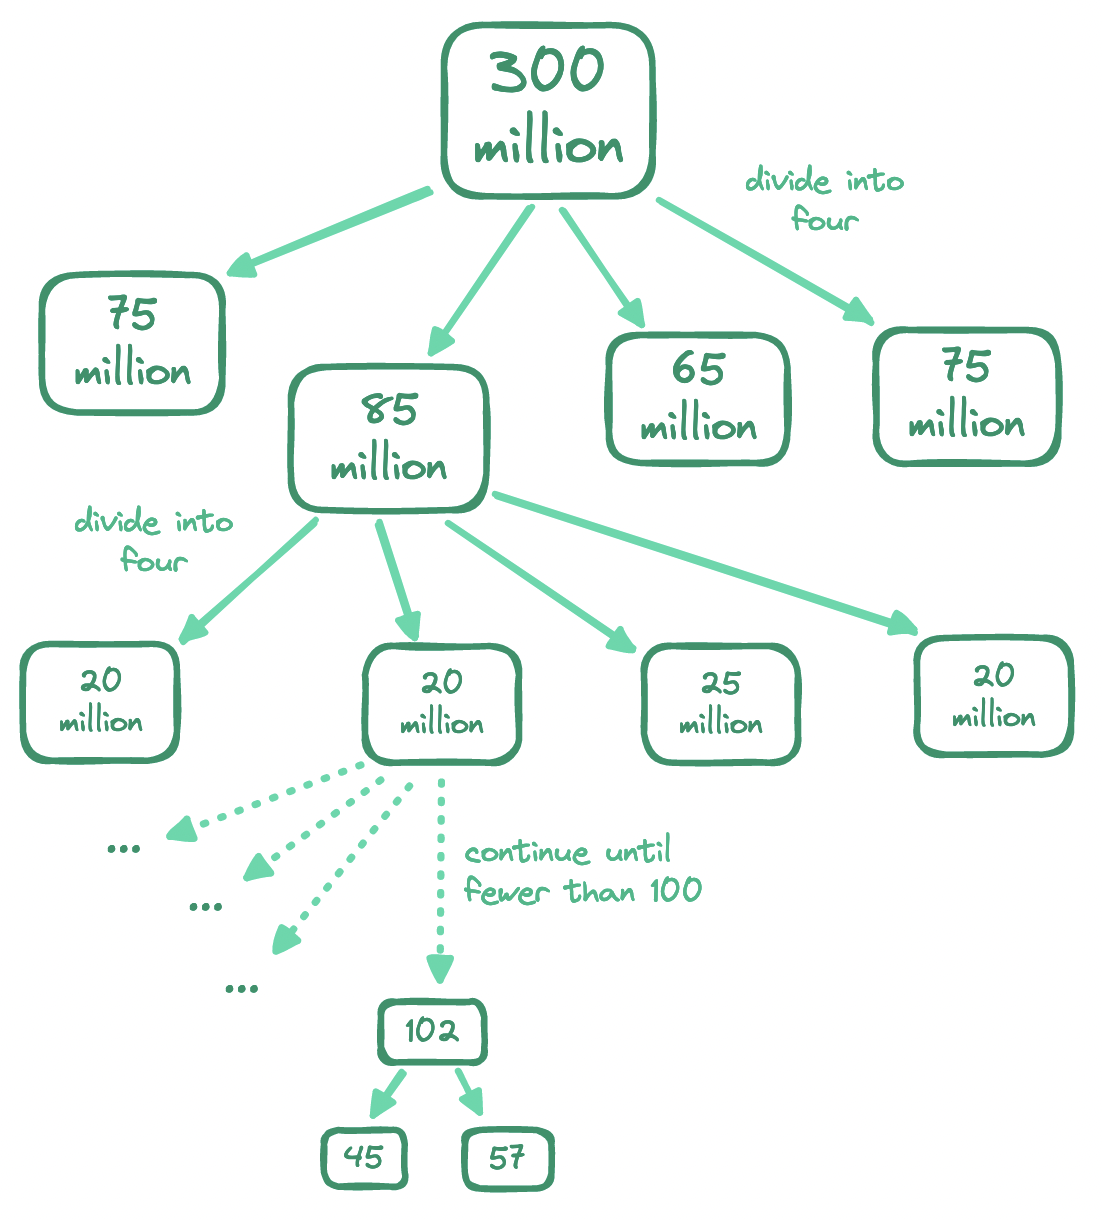 Quadtree: Data structure